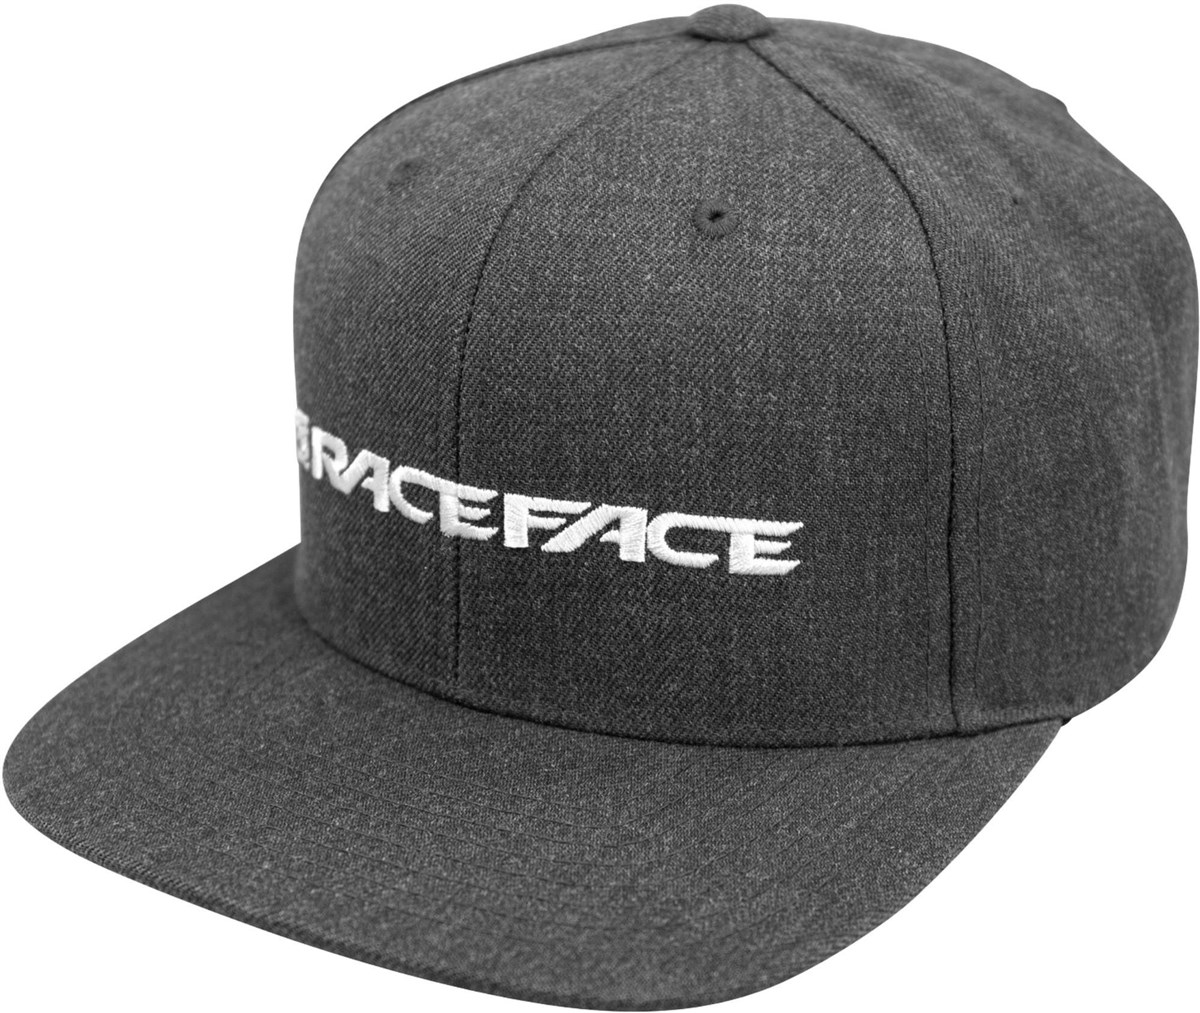 Race Face Classic Logo Snapback Hat product image